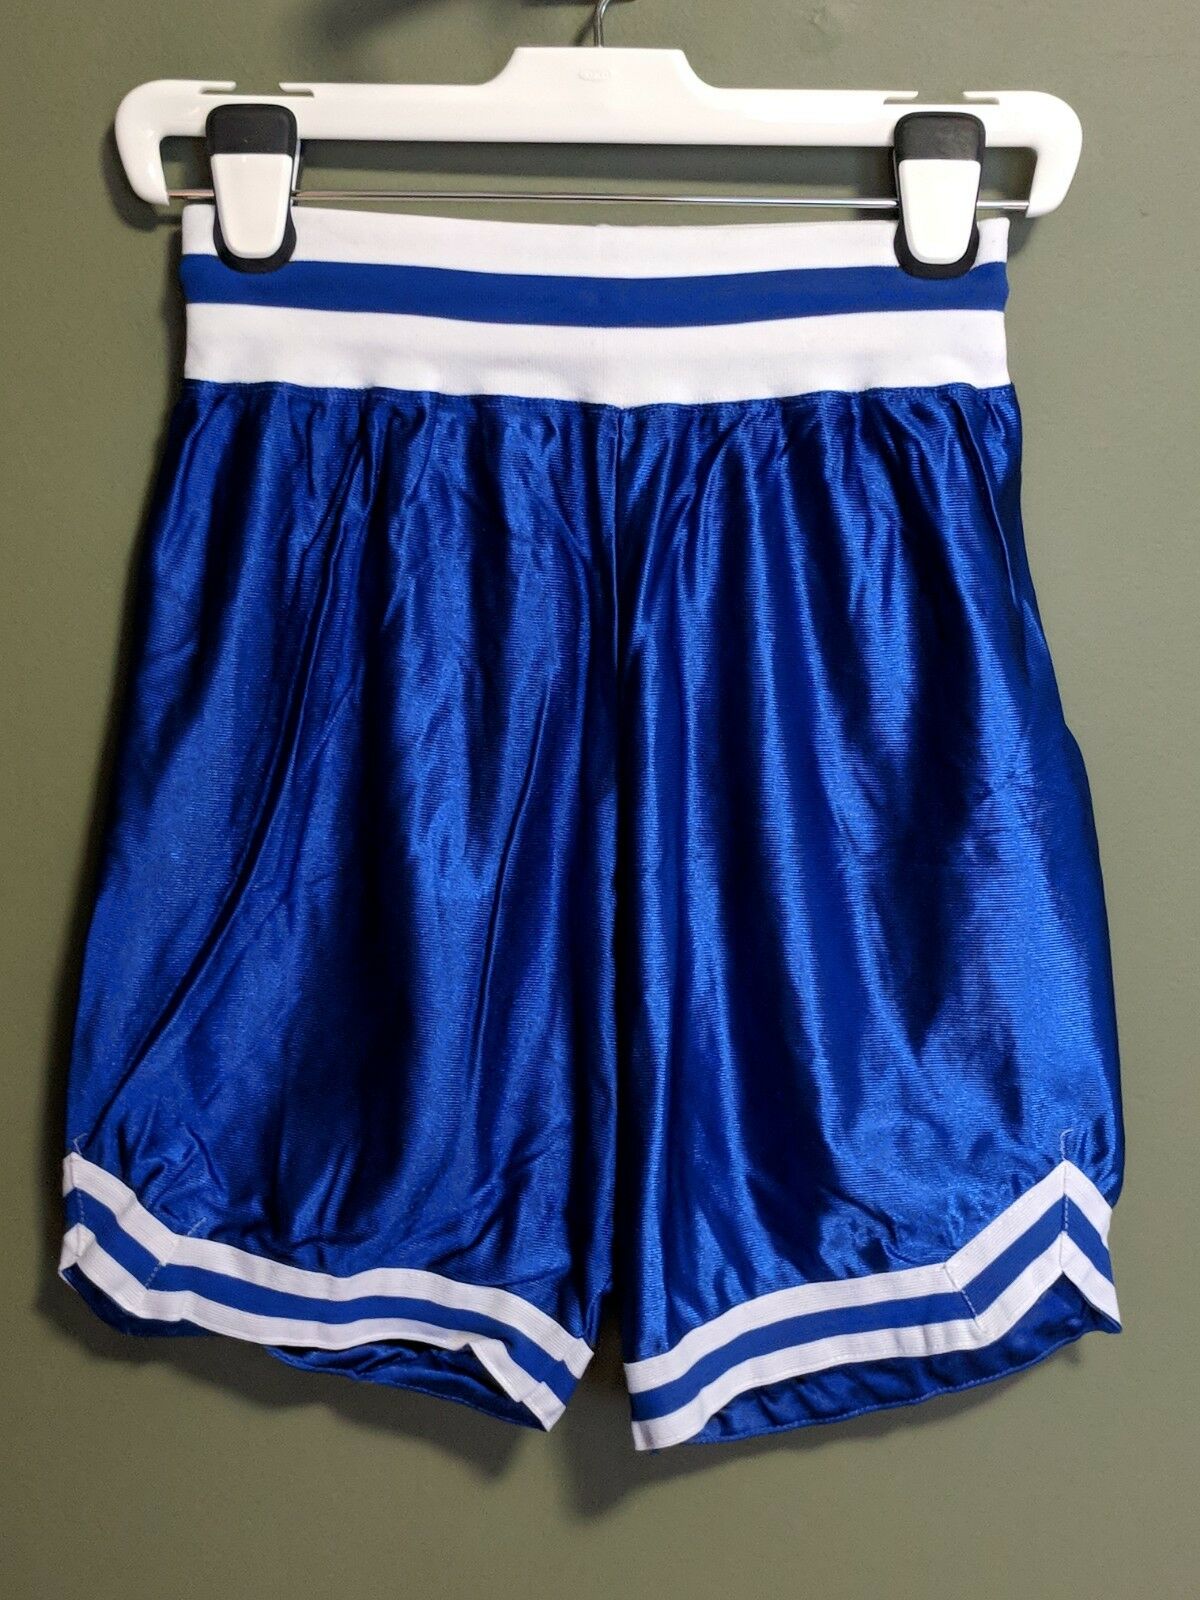 Vtg Don Alleson Shiny White/blue Nylon Basketball Boxing Gym Shorts S Usa Made